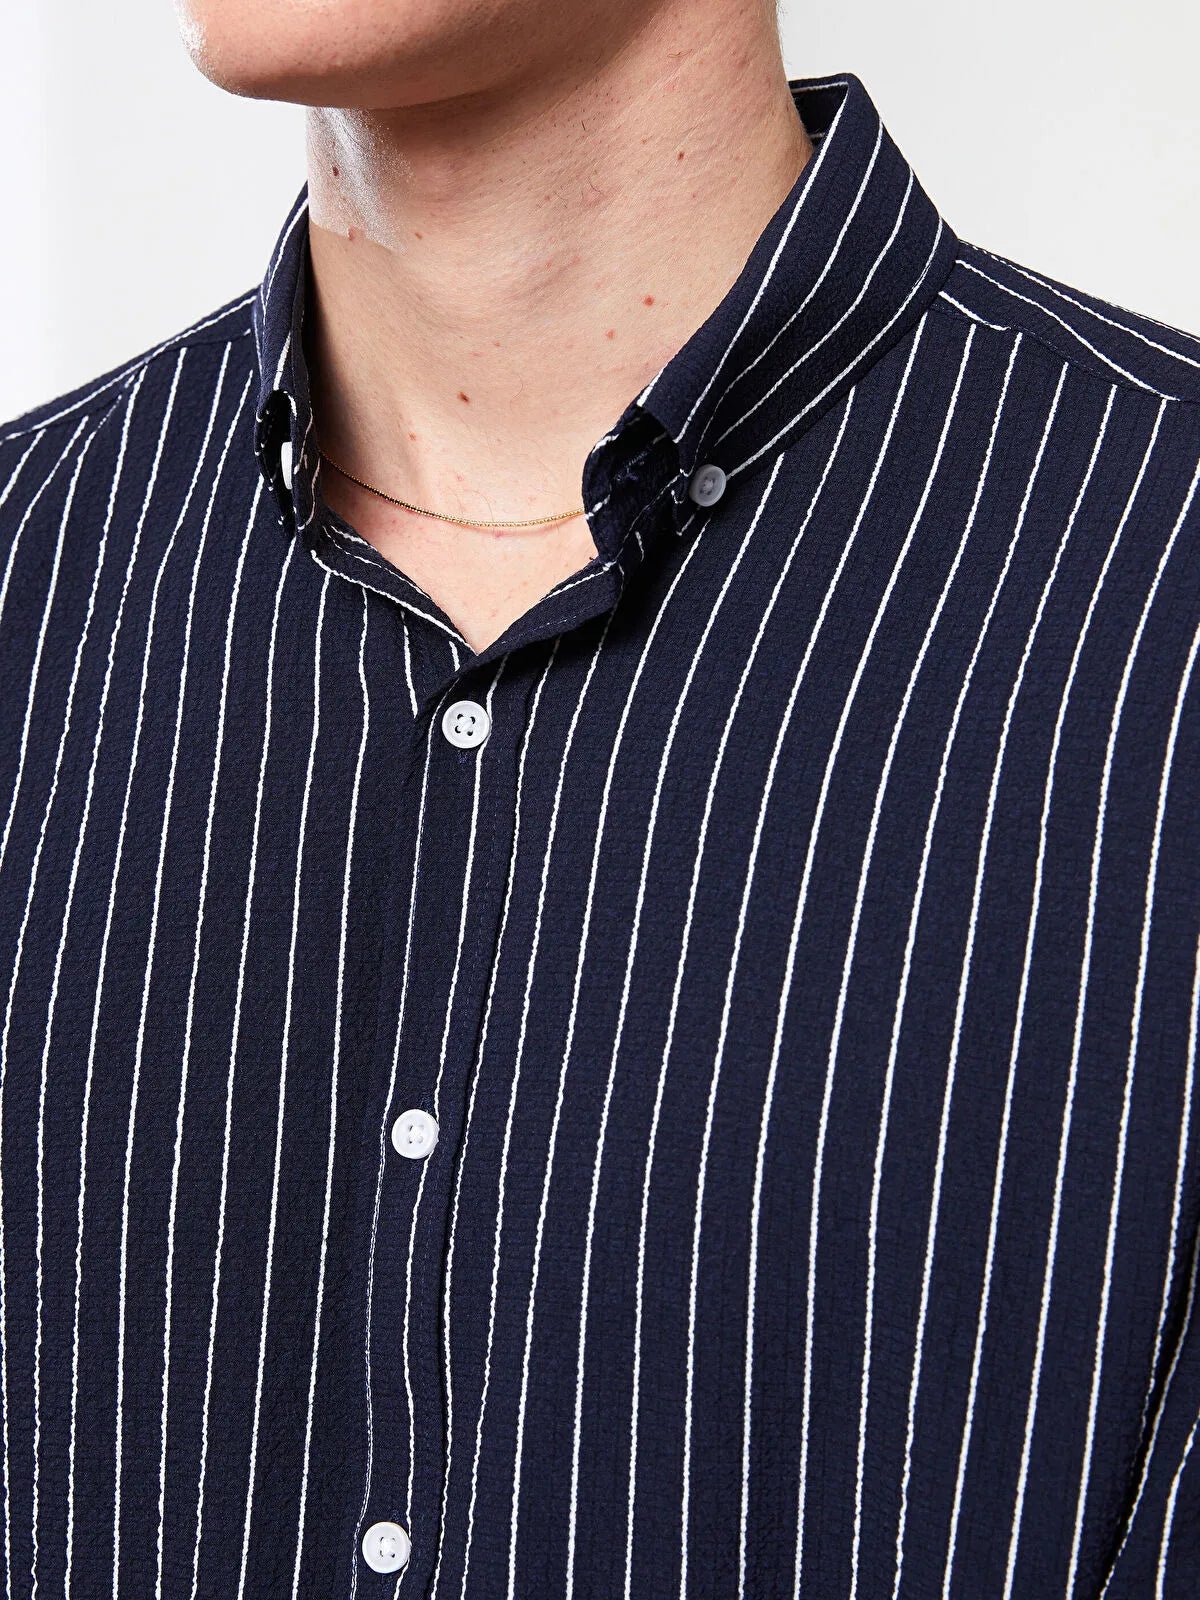 LCW VISION Slim Fit Long Sleeve Striped Men's Shirt